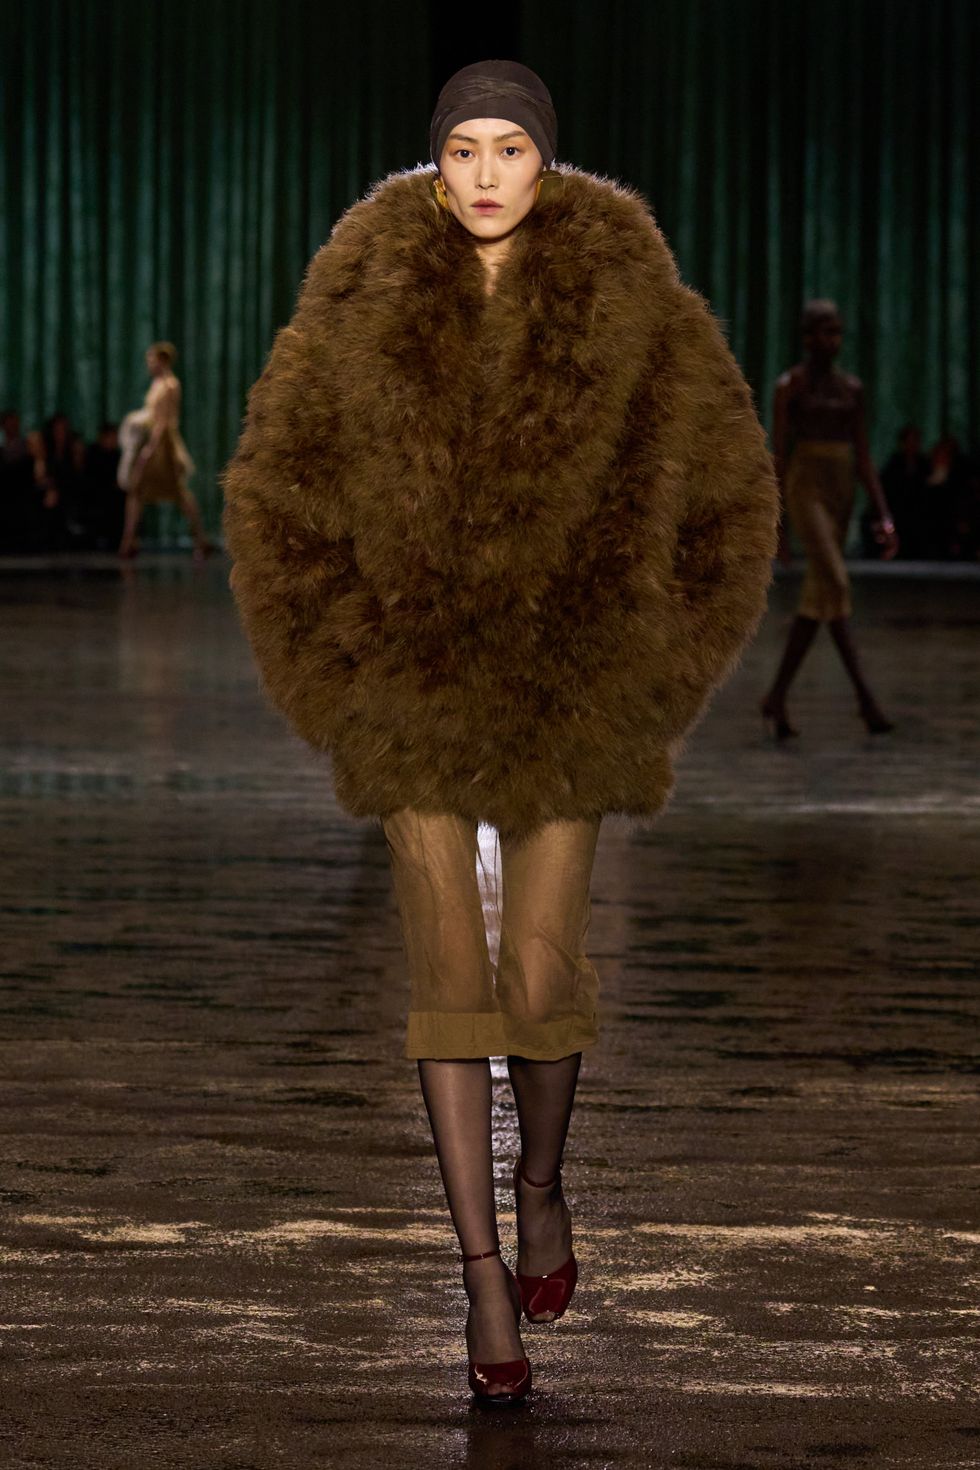 a person wearing a fur coat